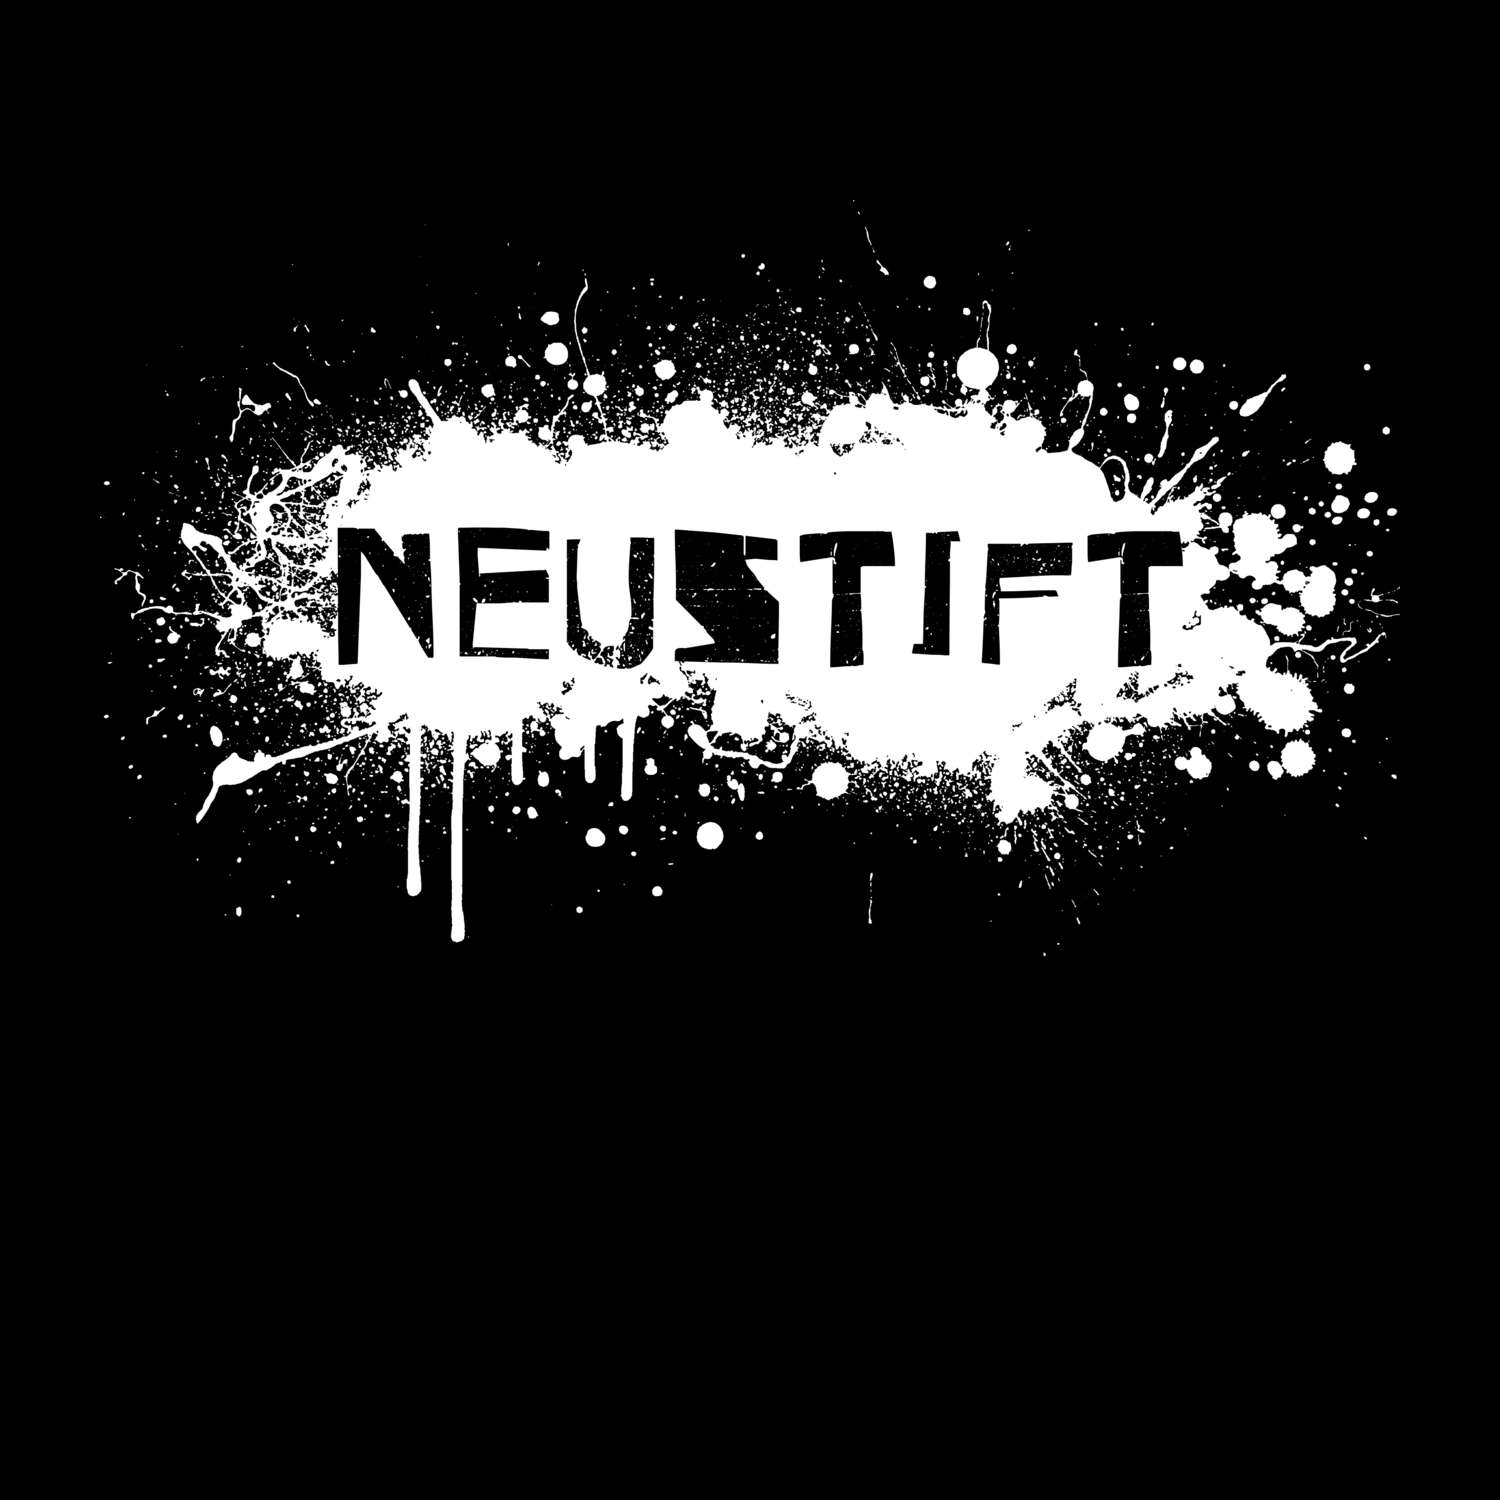 Neustift T-Shirt »Paint Splash Punk«